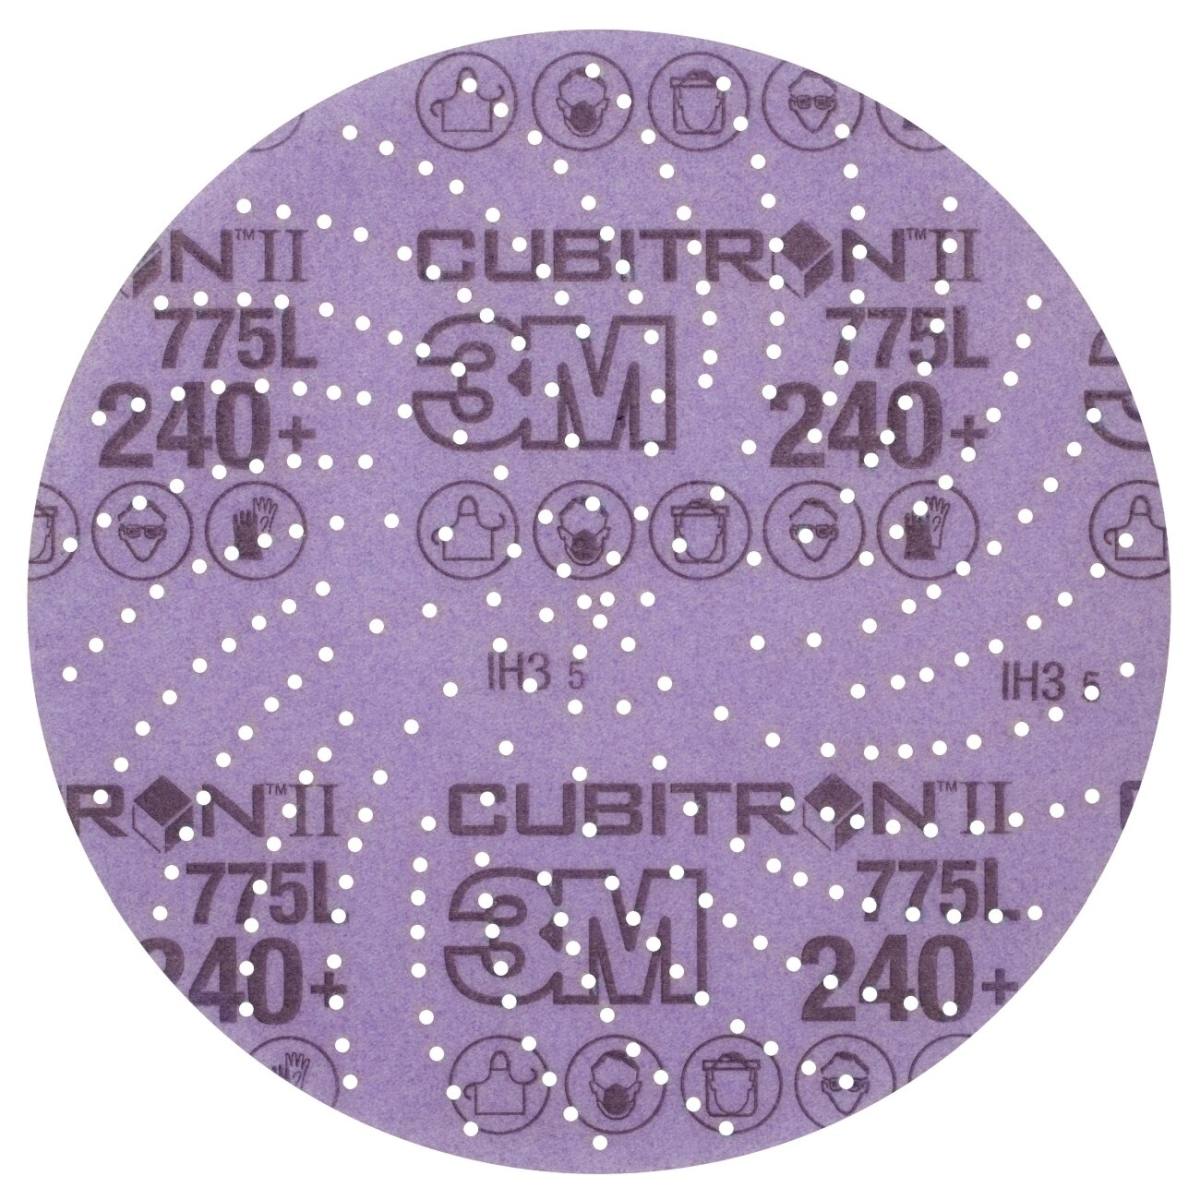 3M Cubitron II Hookit film disc 775L, 150 mm, 240+, multihole #47098